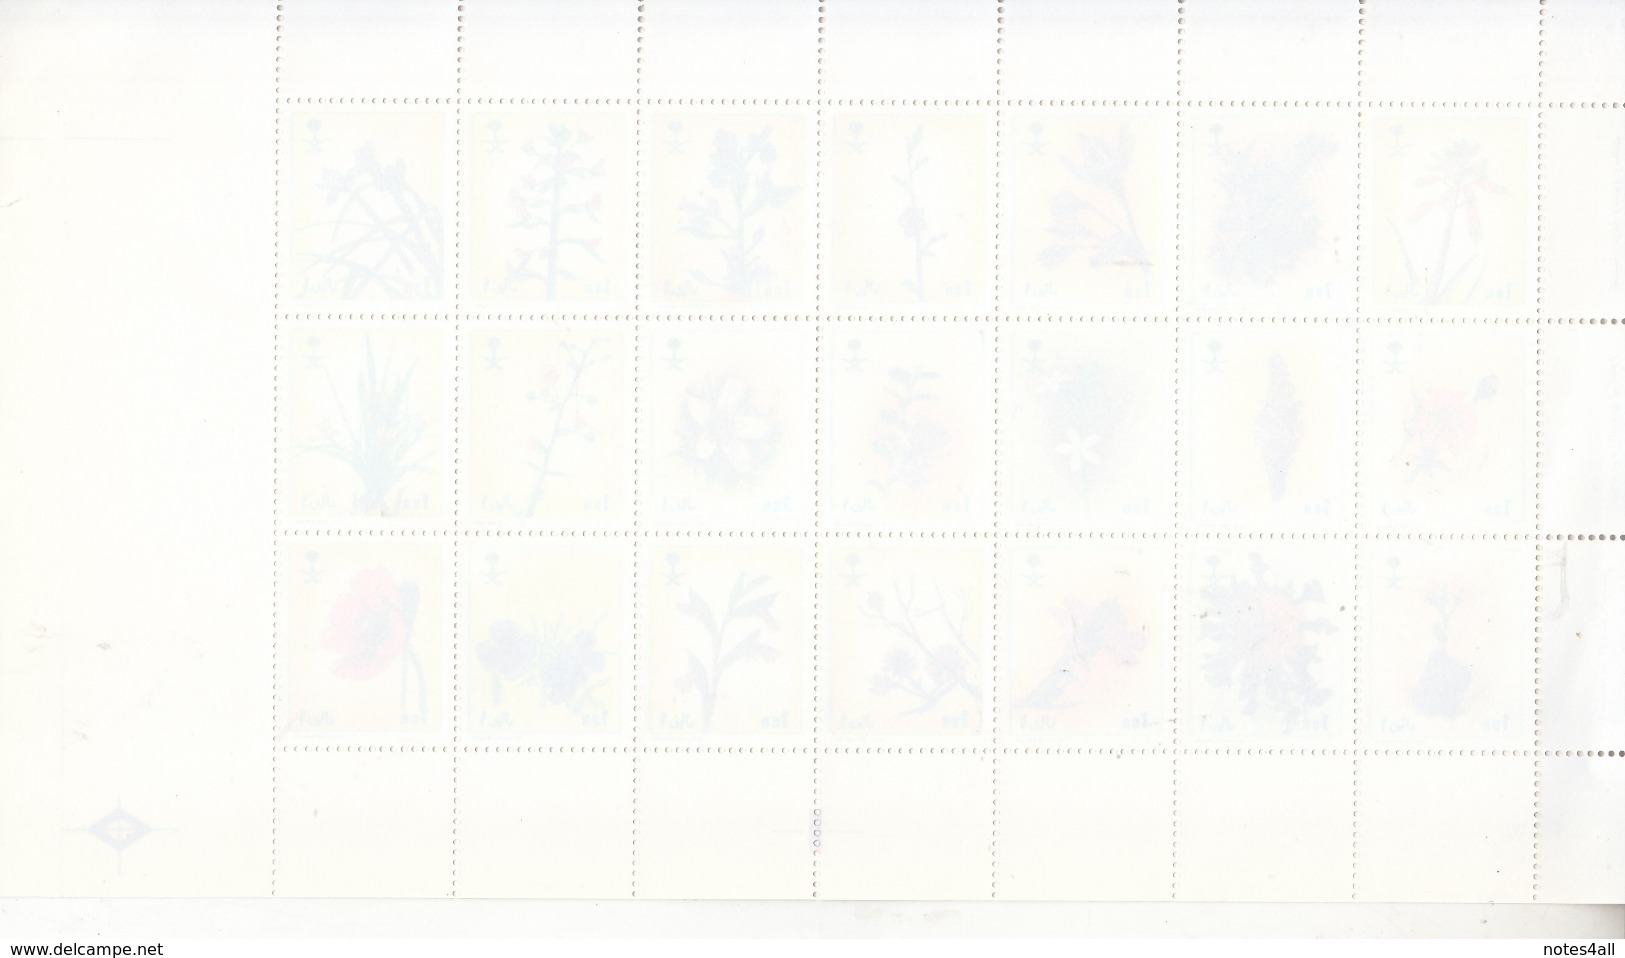 Stamps SAUDI ARABIA 2000 FEB.1 SC-1292A FLOWERS BLOCK SHEET OF 21 MNH CV $40 - Saudi Arabia